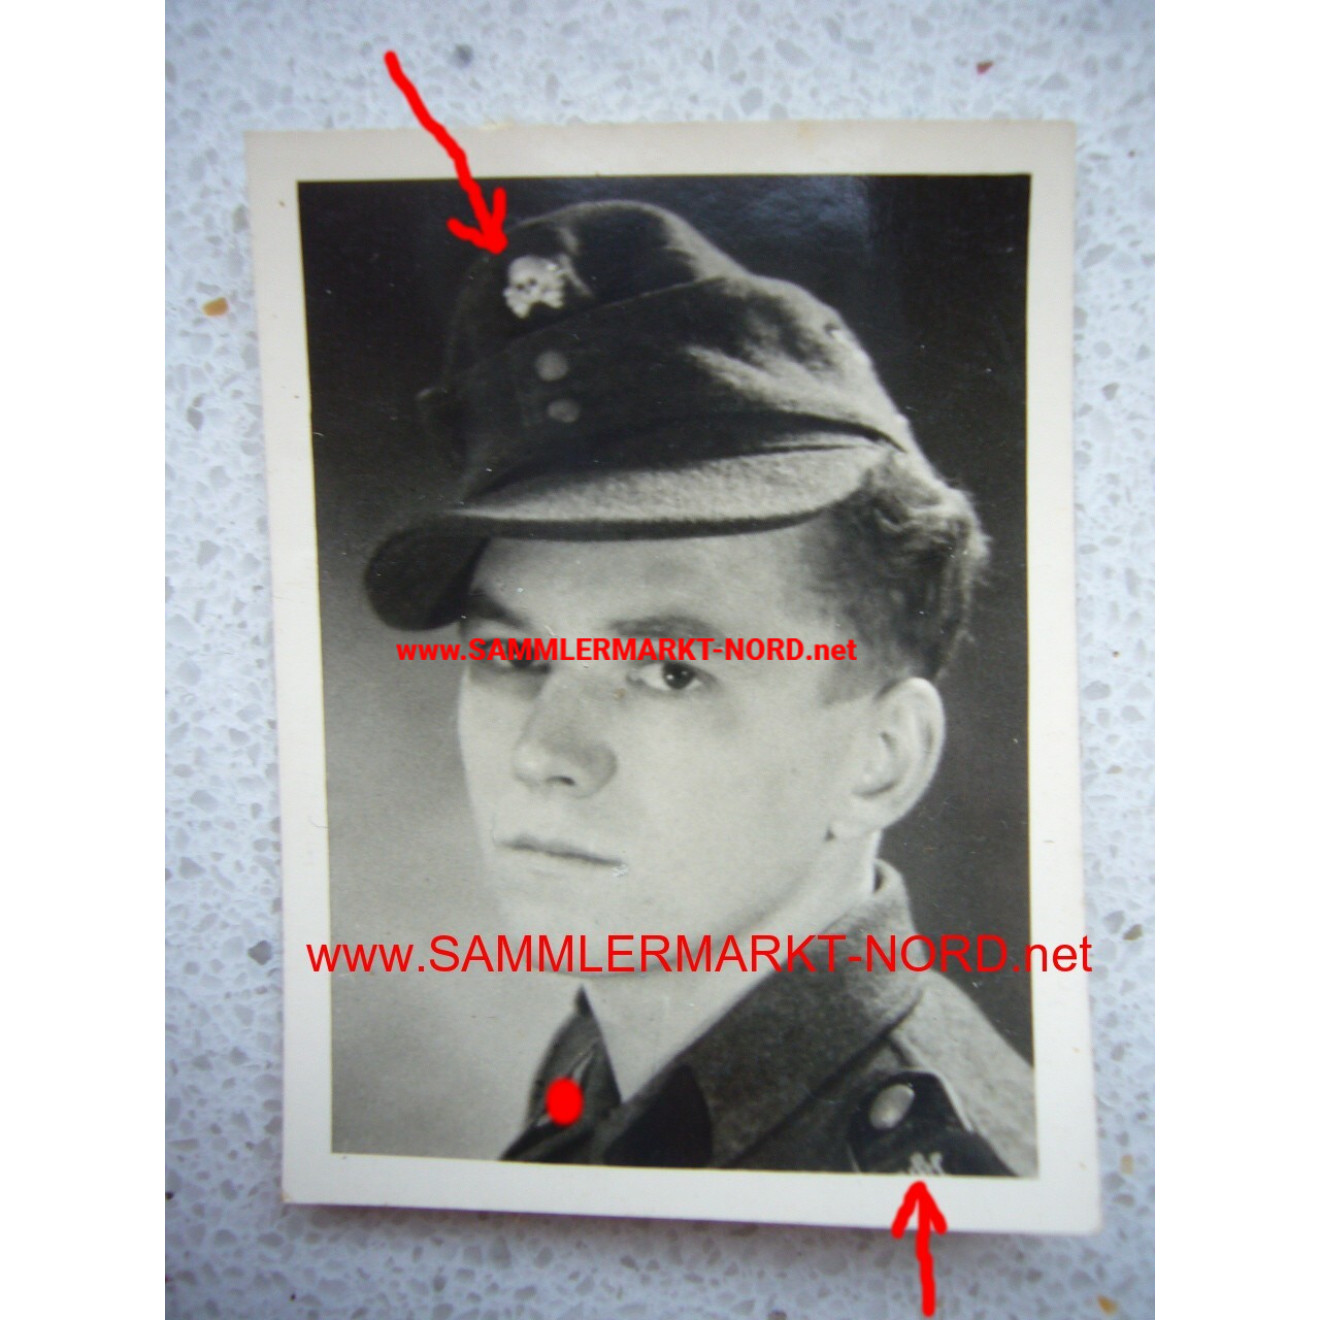 SS - Man of the Leibstandarte SS Adolf Hitler (LAH)